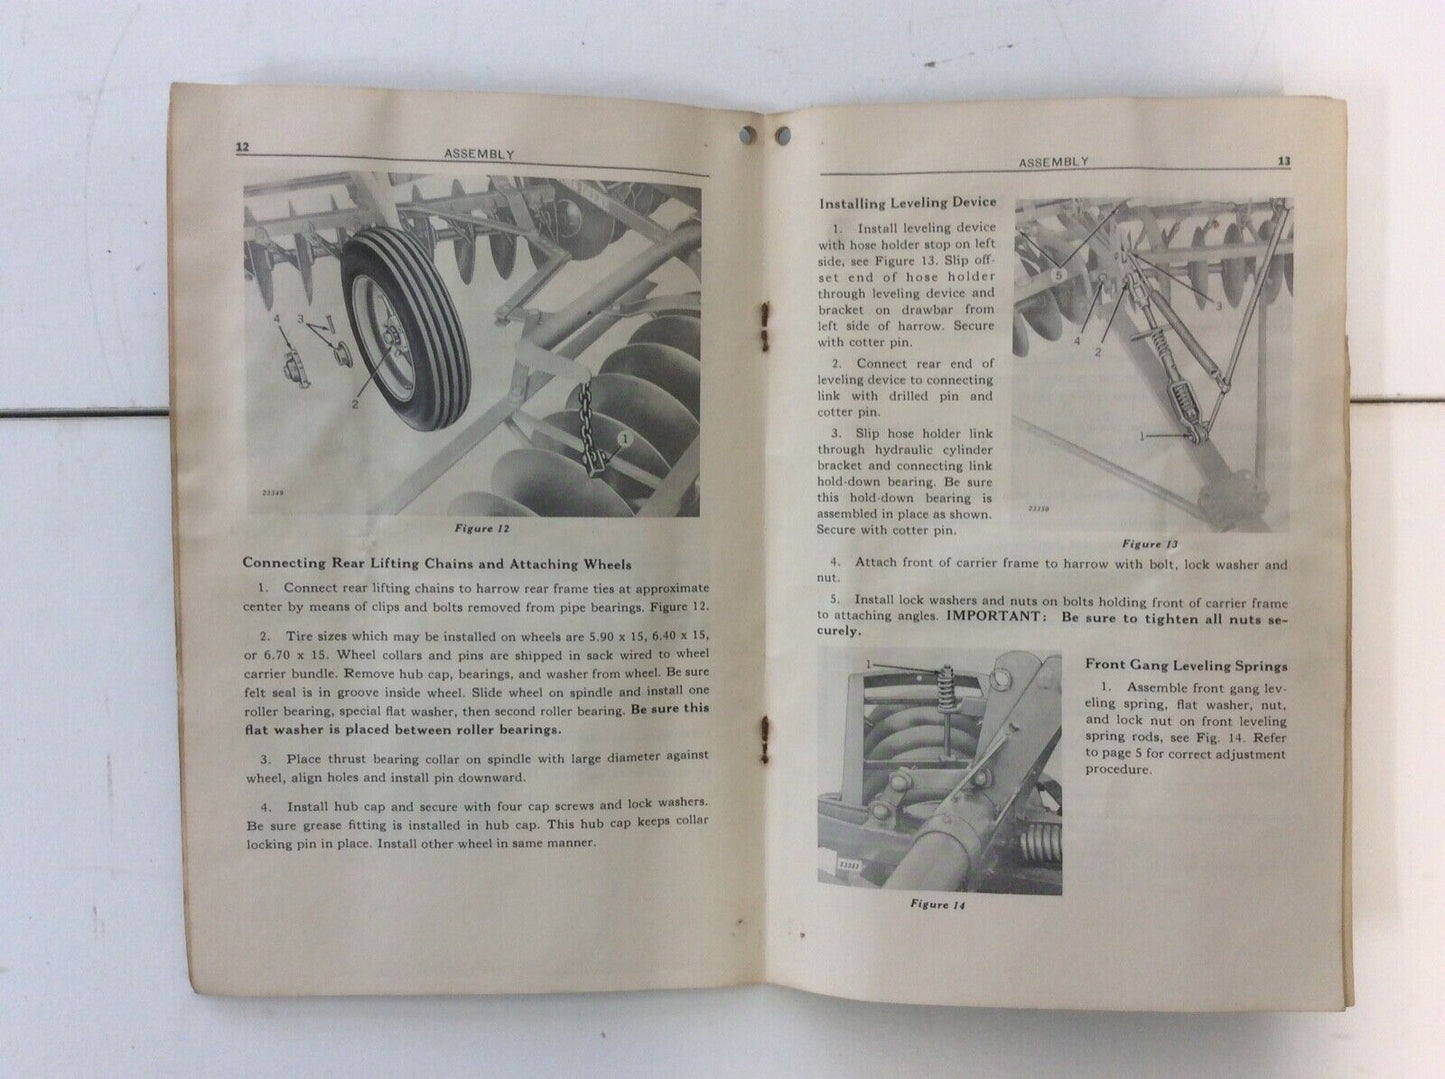 OMB34953 John Deere Operators Manual For Wheel Carrier Attachment For KBA Discs